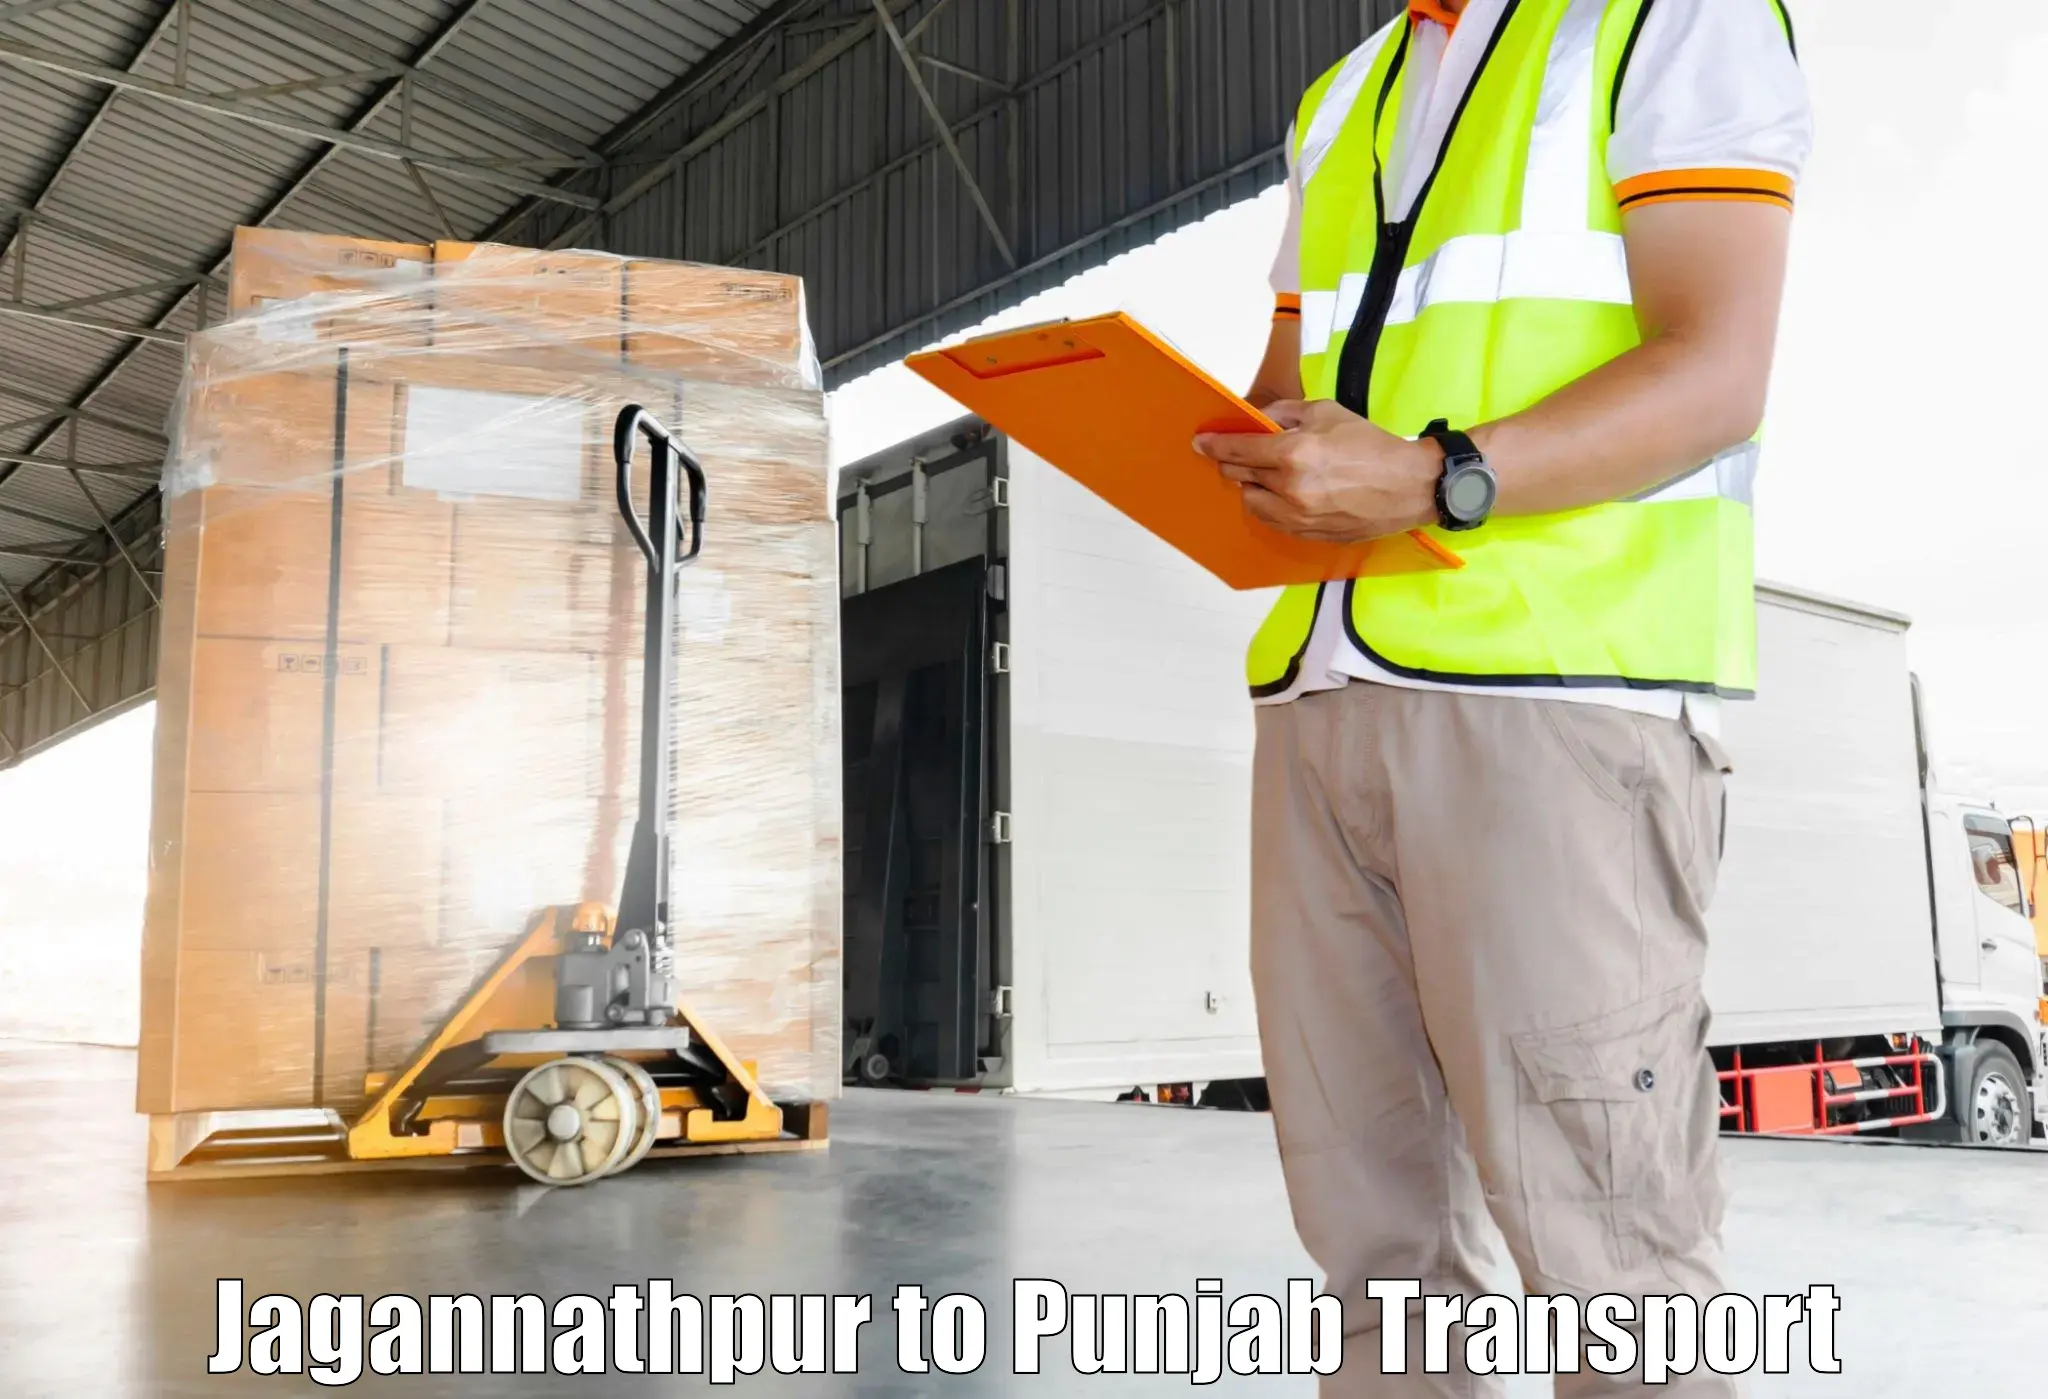 Two wheeler parcel service Jagannathpur to Patiala